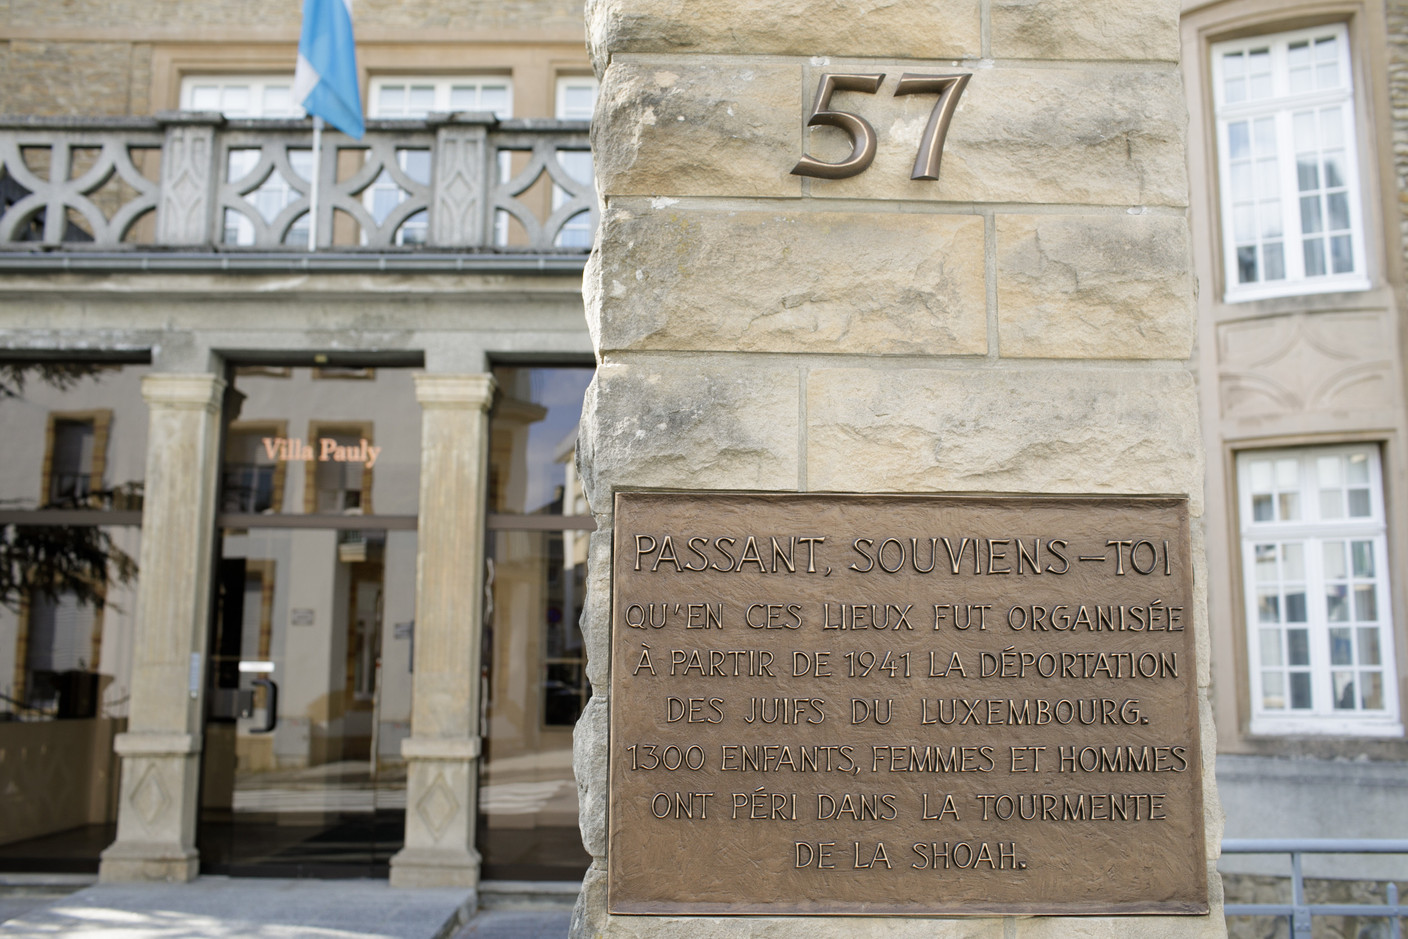 A memorial plaque outside the building Matic Zorman / Maison Moderne